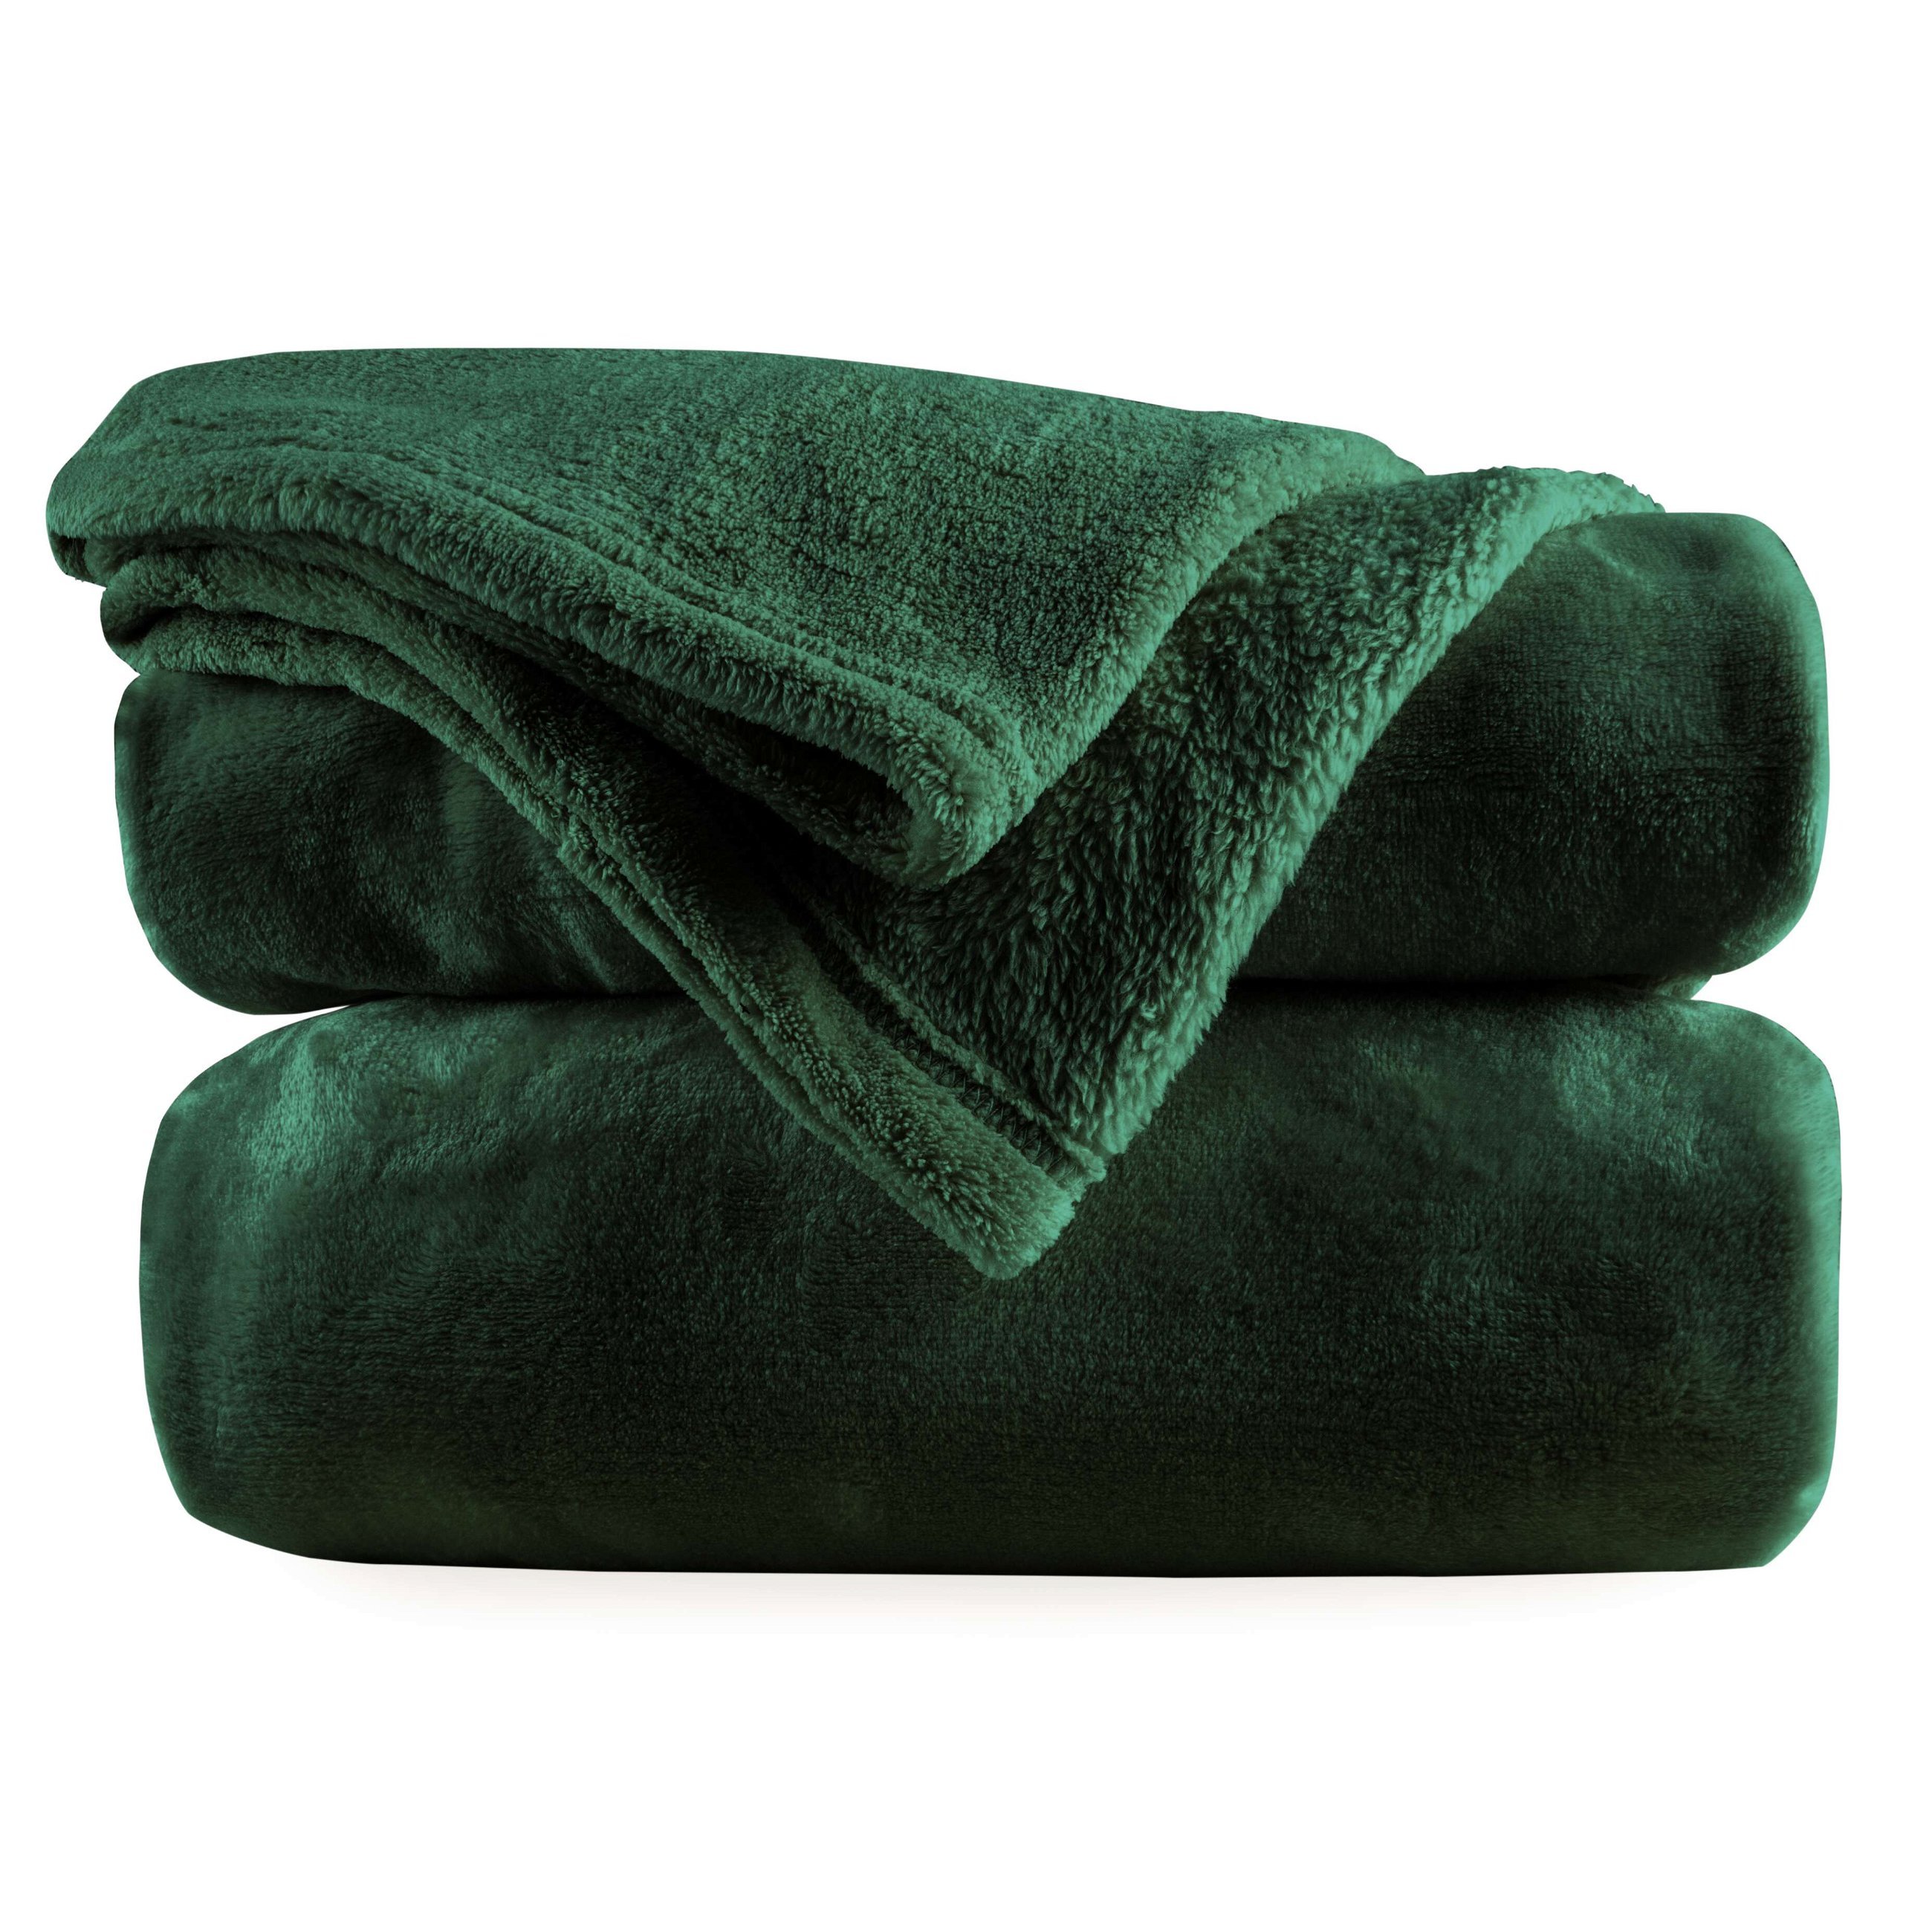 Snuggle blanket Snuggle fleece blanket XL with sleeves green 170x200cm